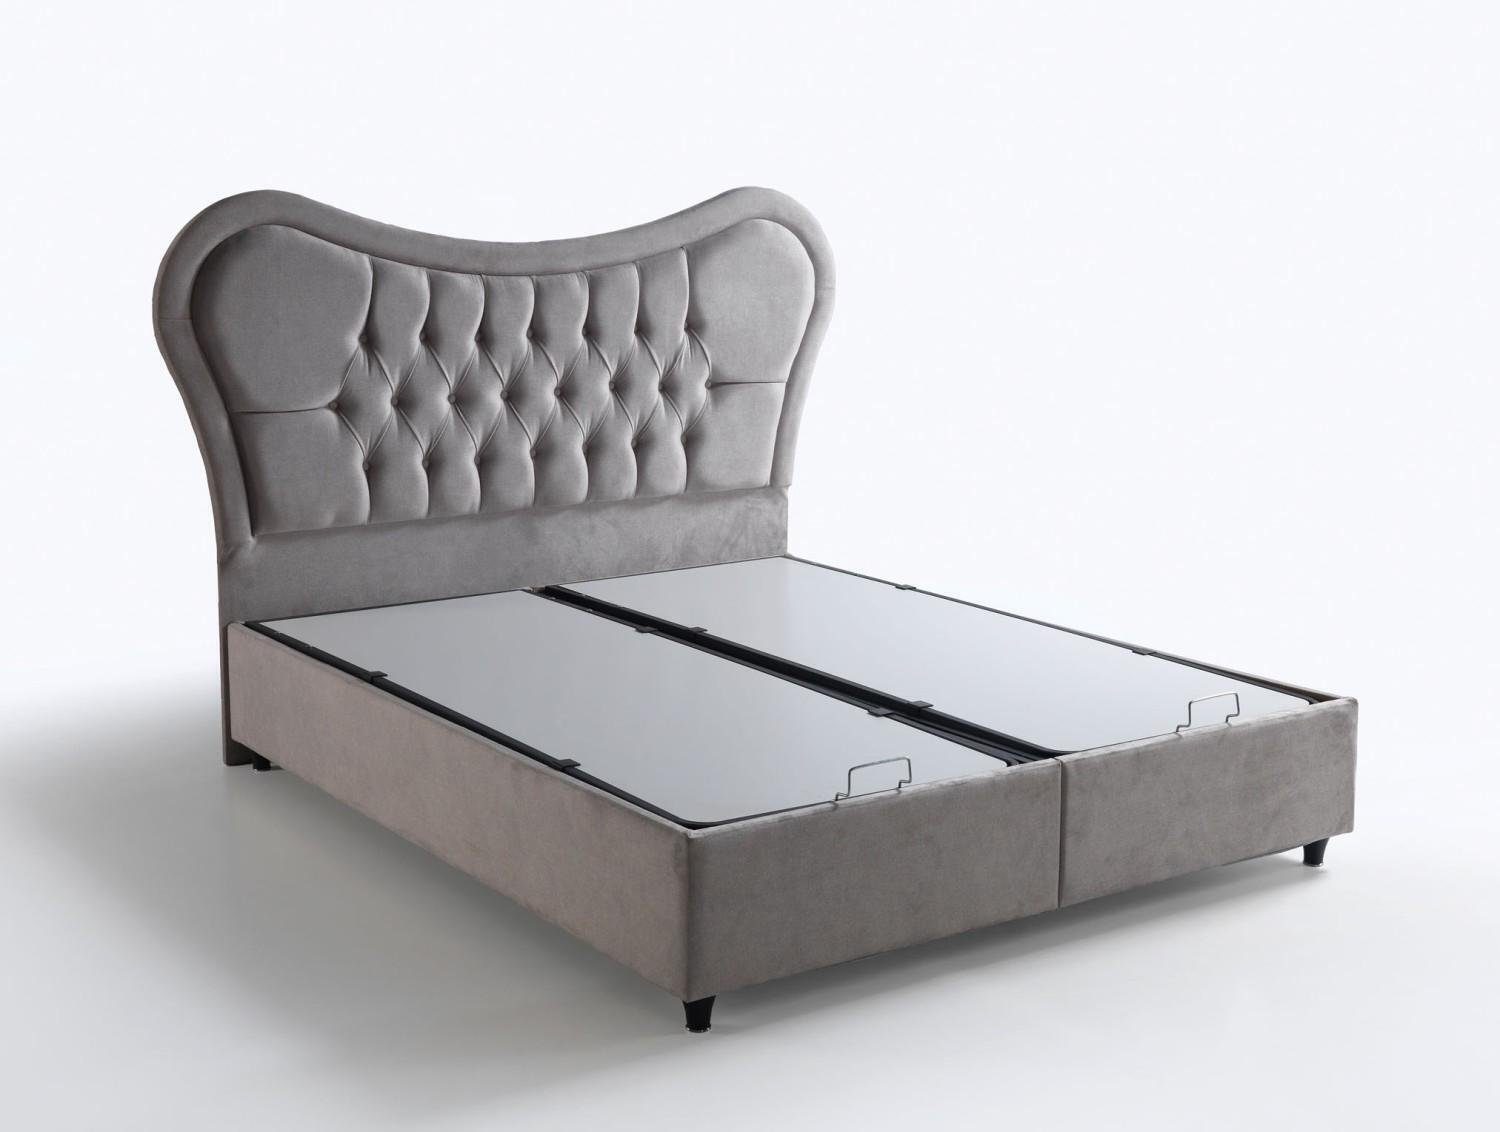 Bett Made Polster Europe (Made In Schlafzimmer Beige Europe), Design Luxus Betten Chesterfield In Bett Möbel JVmoebel